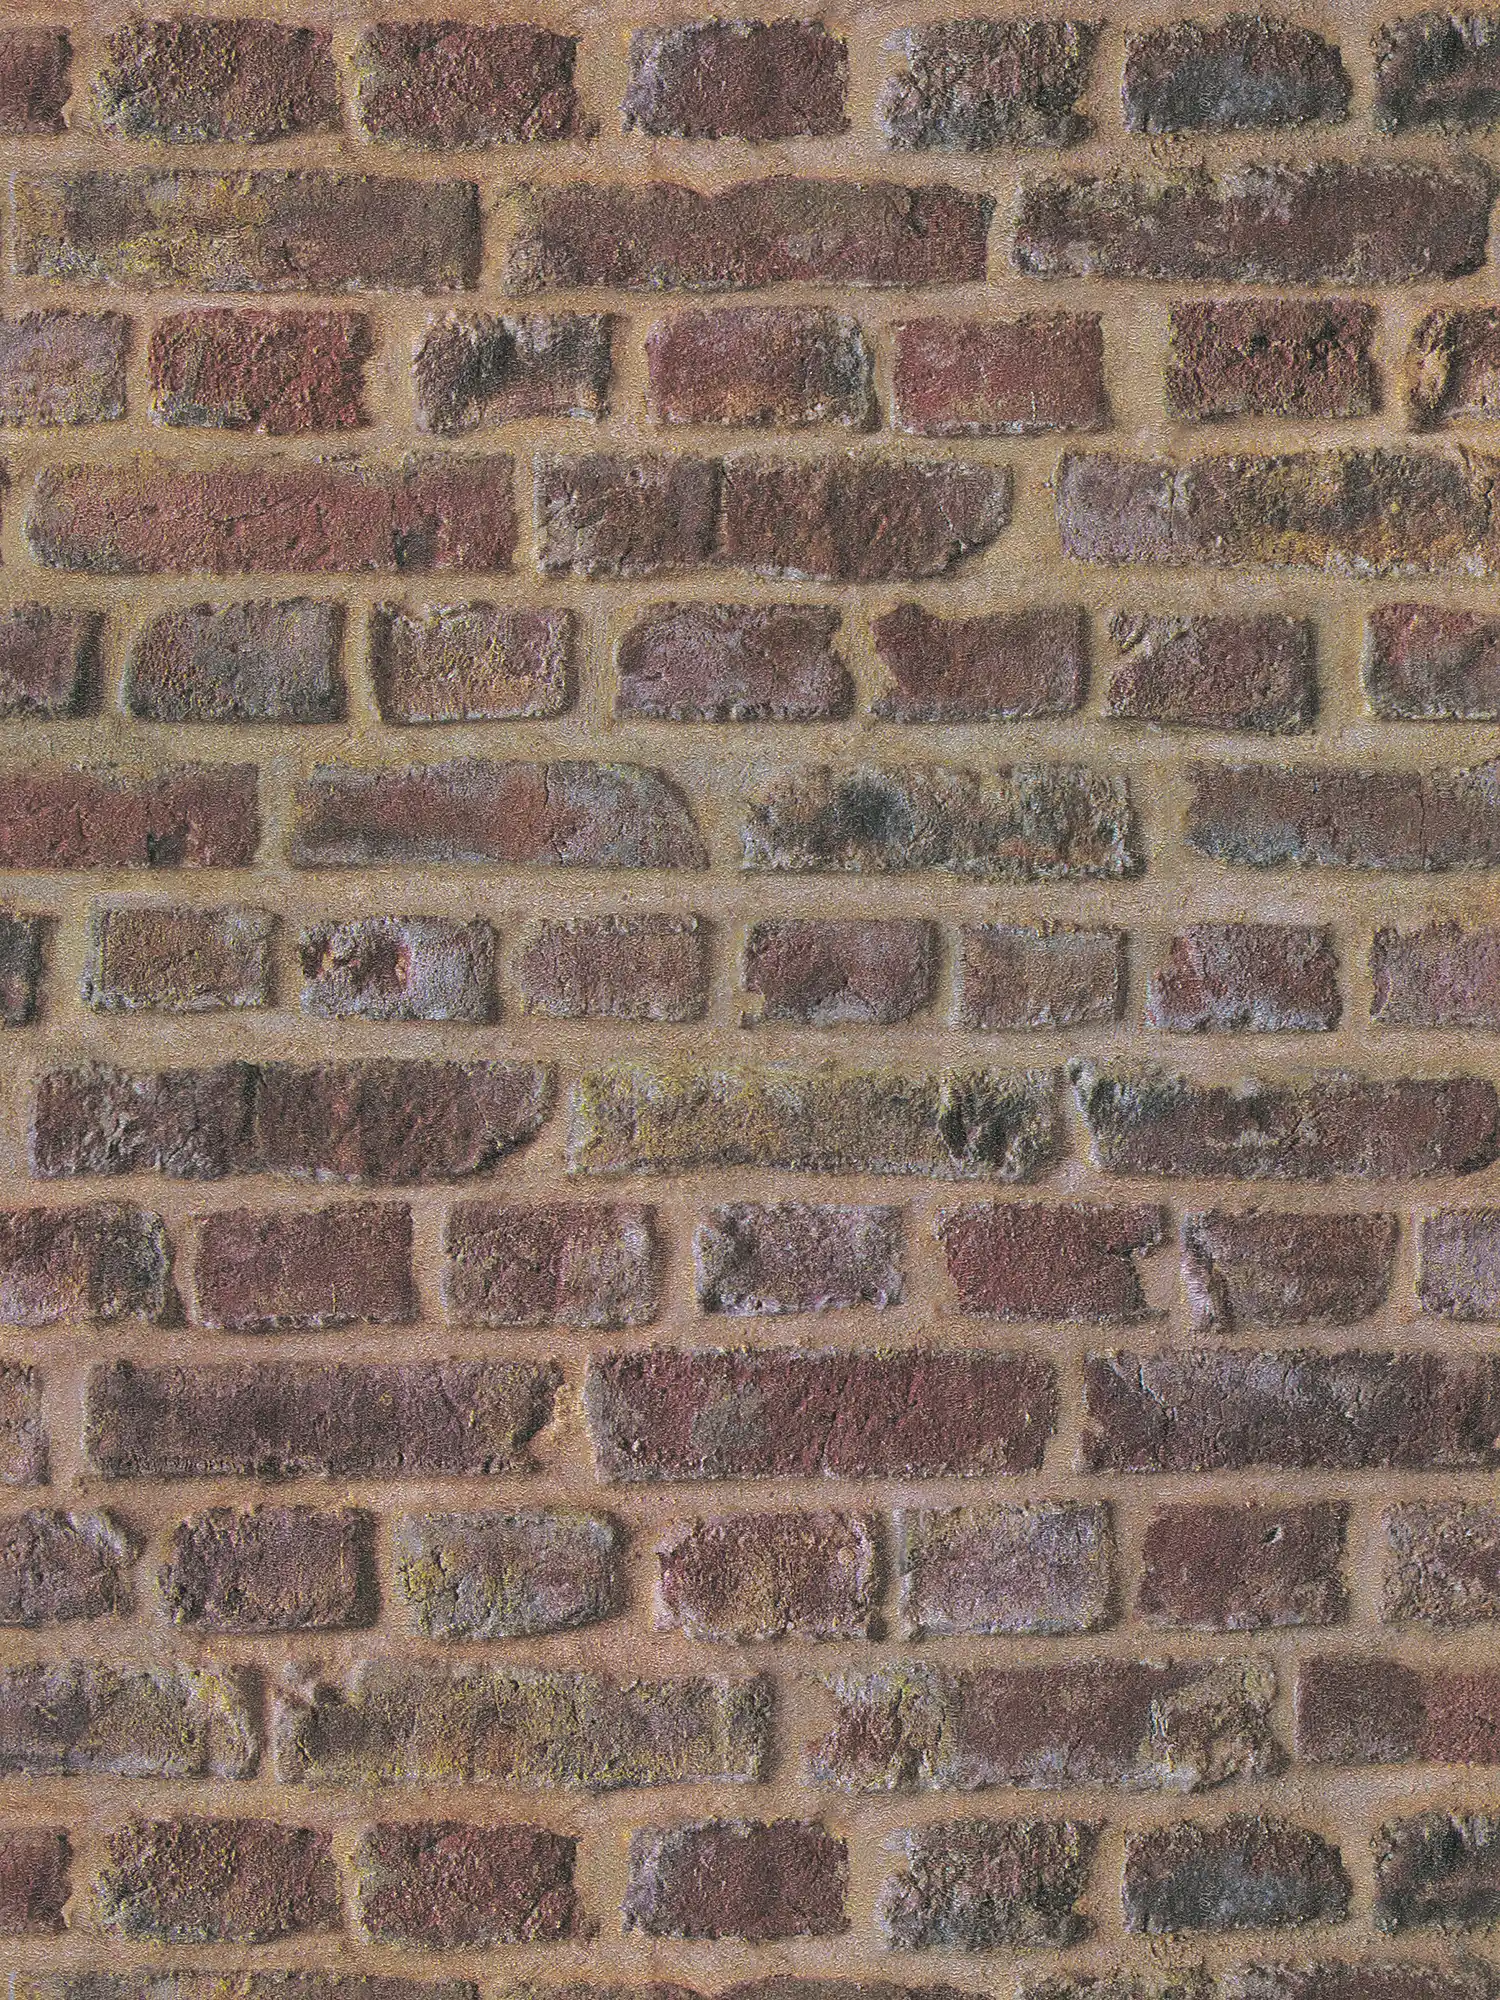 Wallpaper brick wall design 3D stone look - brown, red, beige
